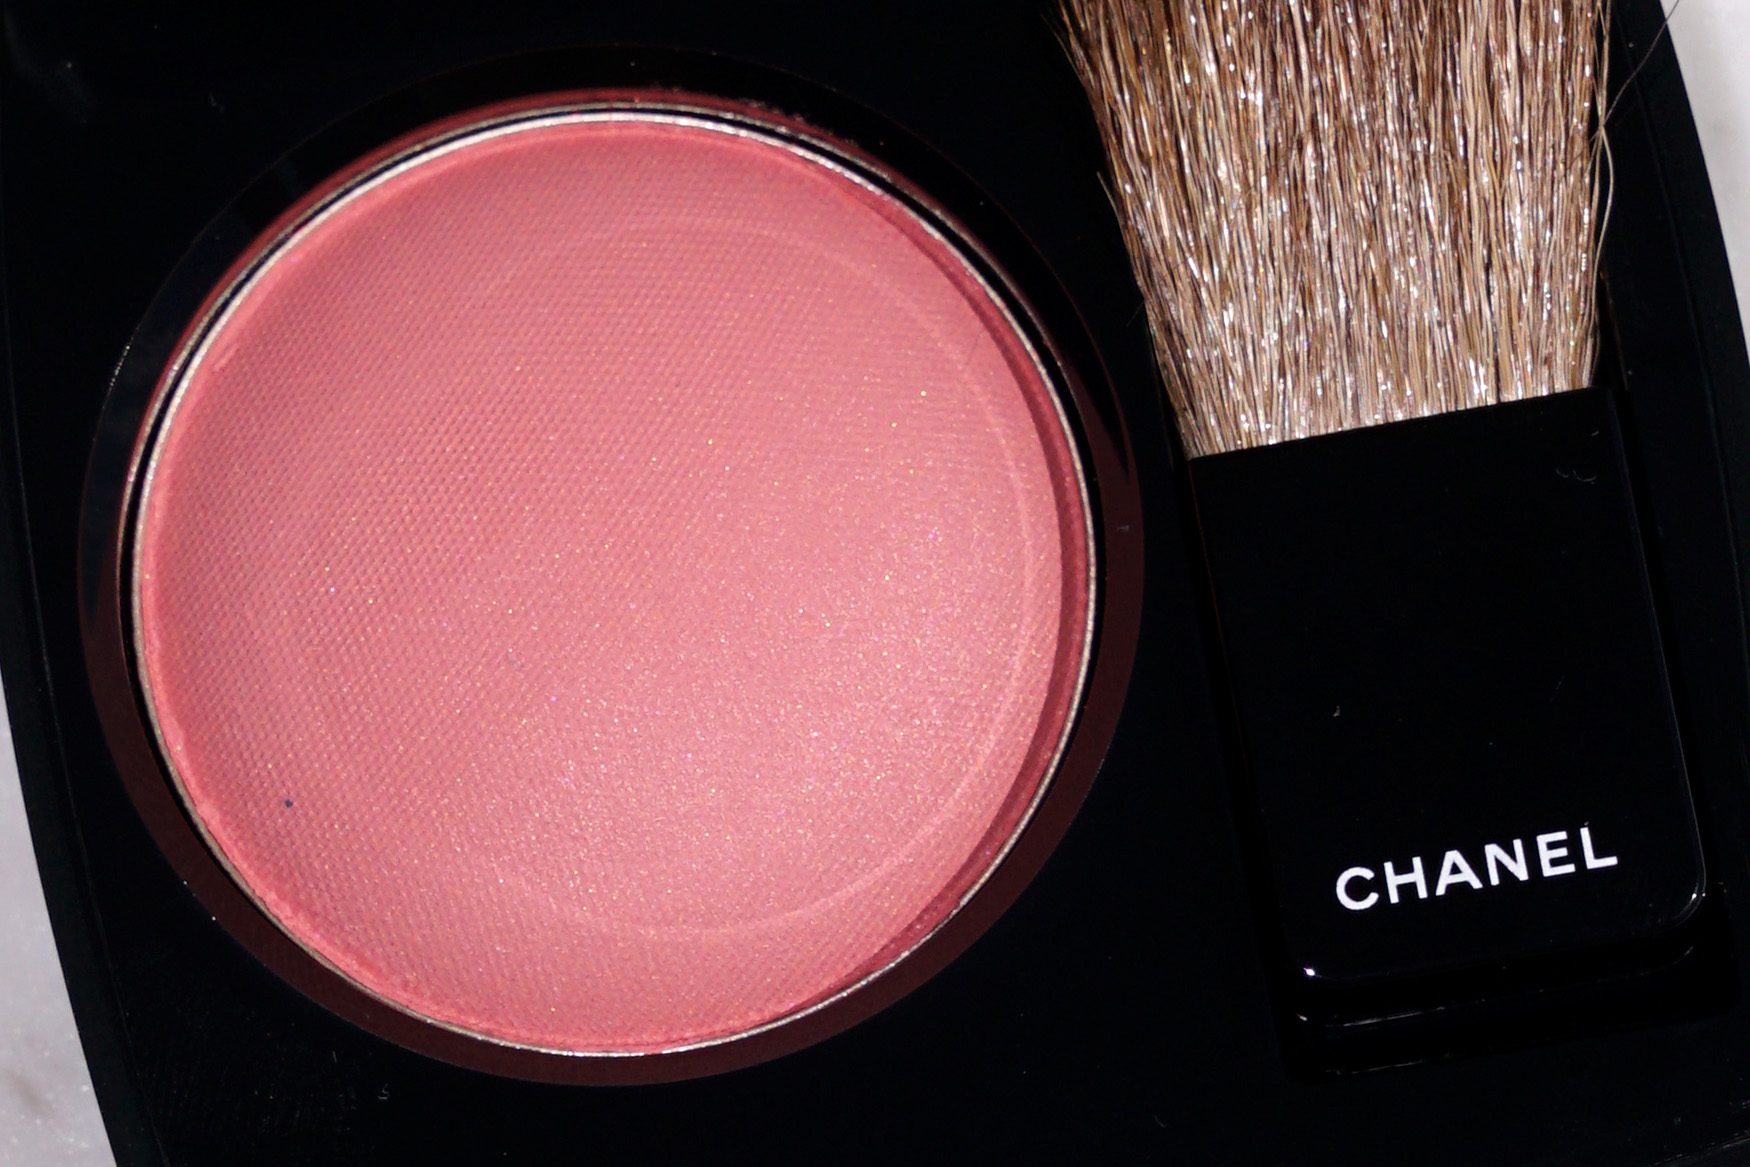 New Shades of Chanel Powder Blush